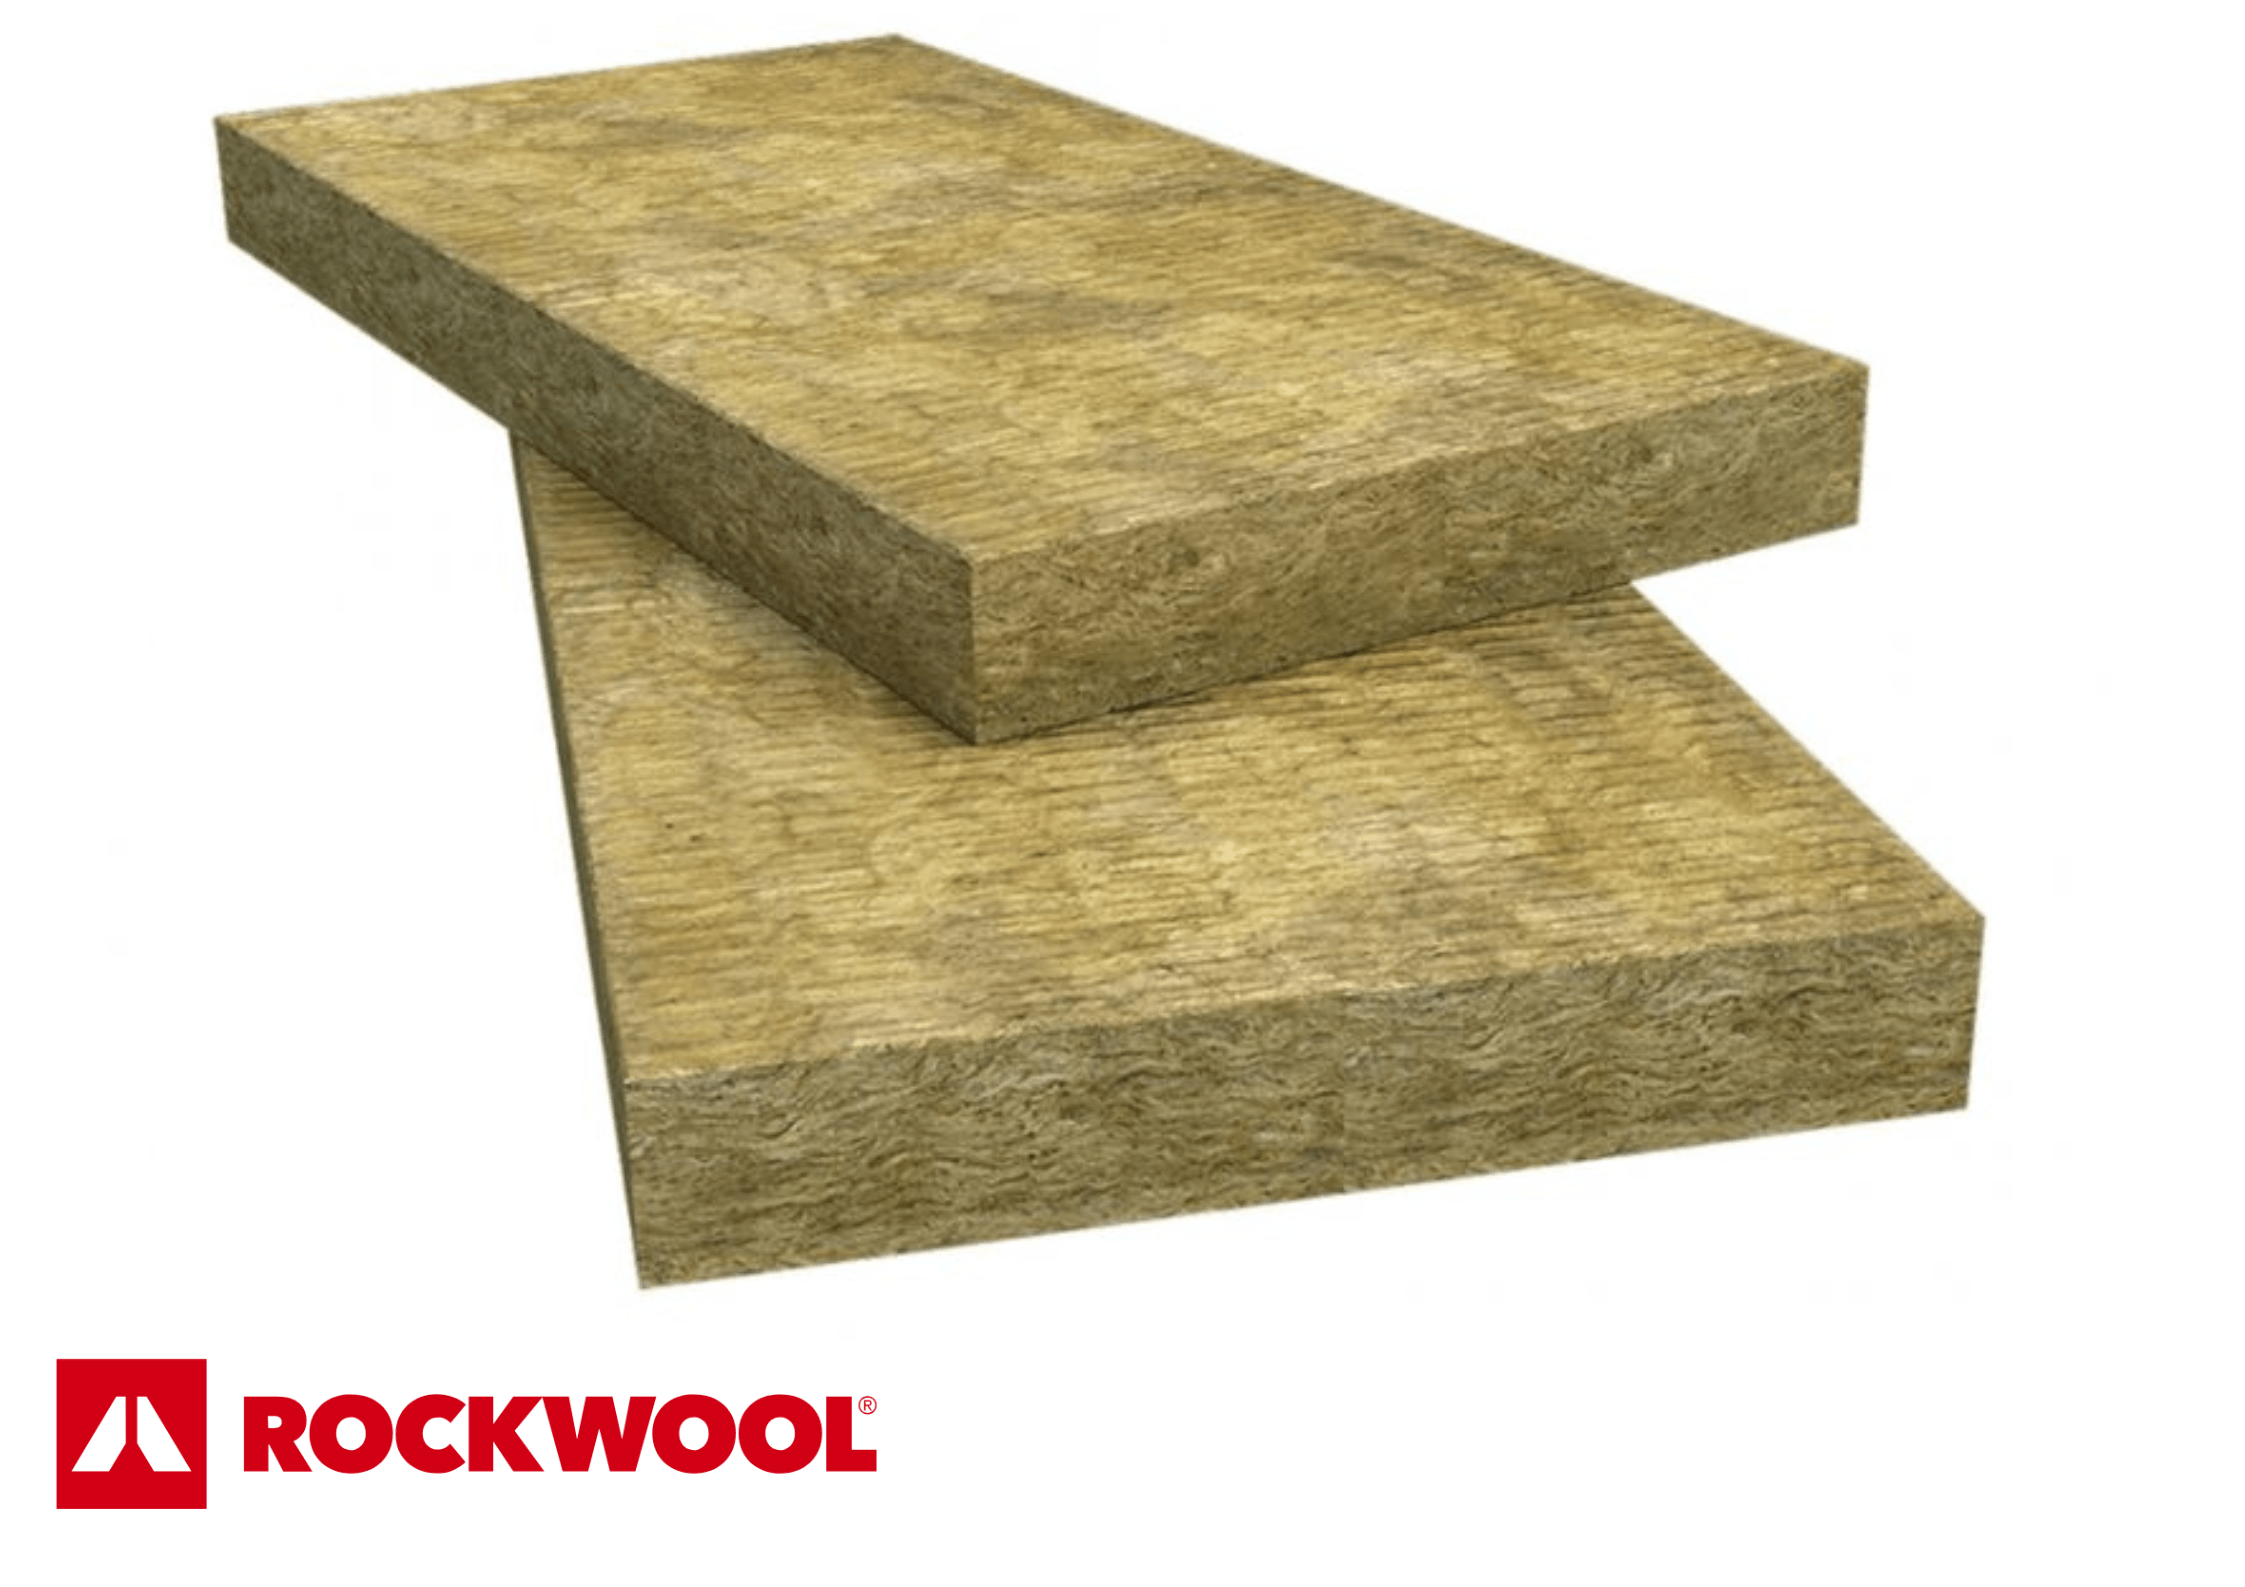 Rockwool Rockwool RW4 Acoustic Insulation Slab | 1200mm x 600mm